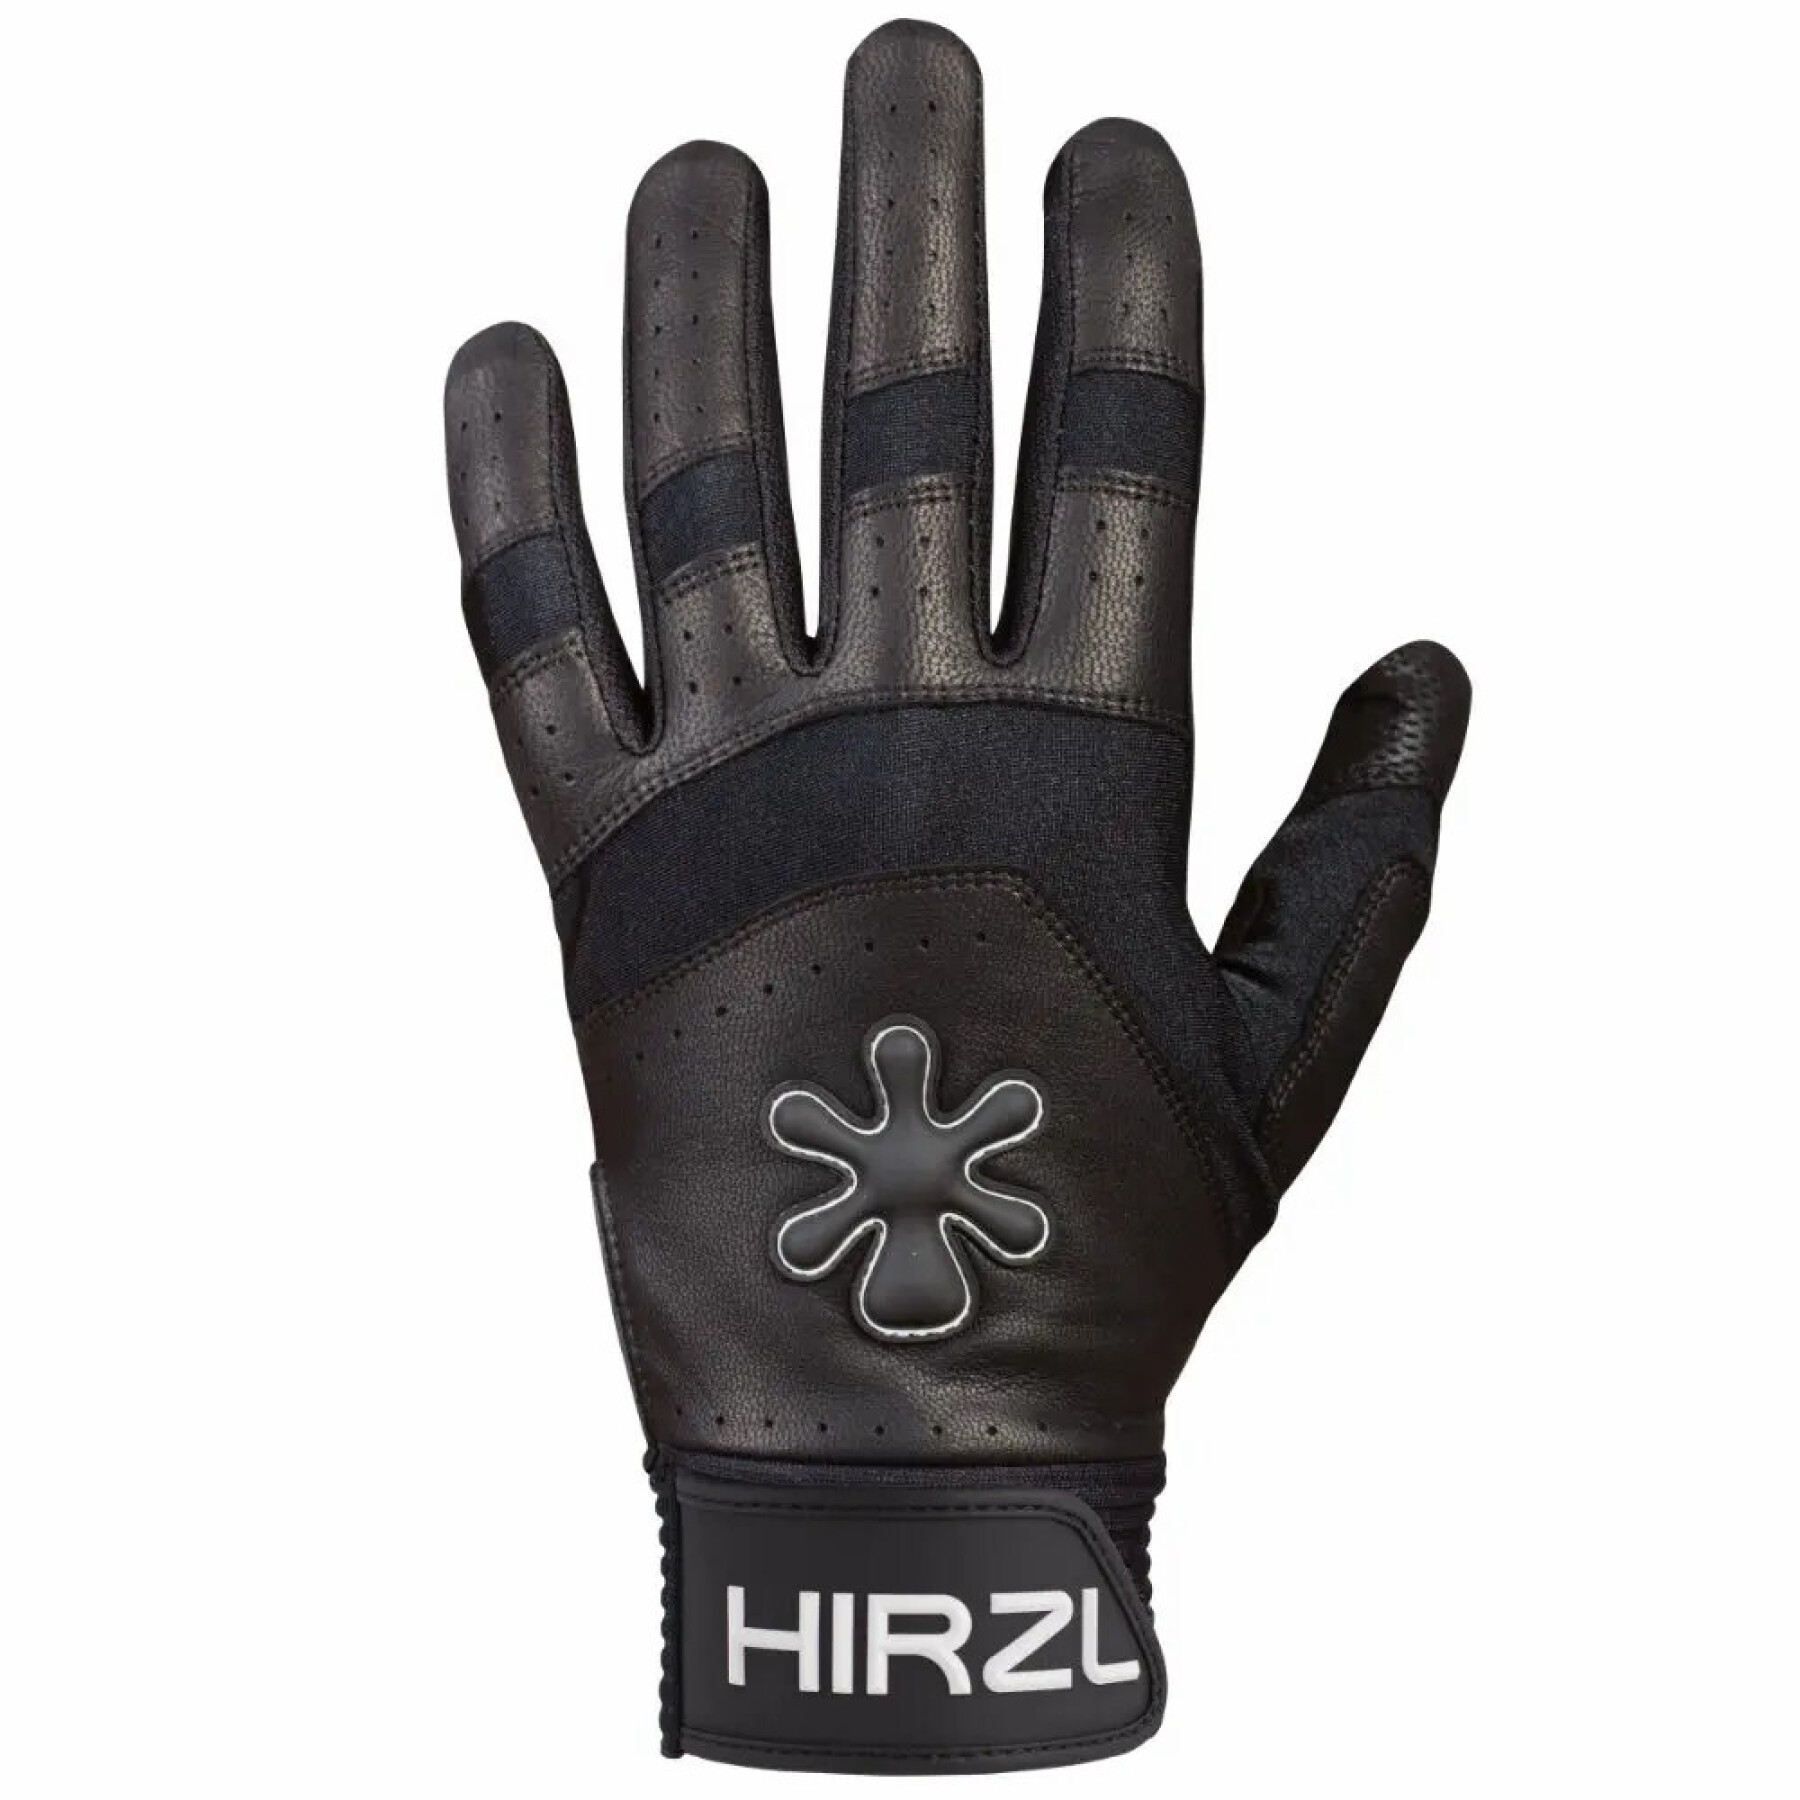 Long gloves Hirzl Grippp Force FF (x2)